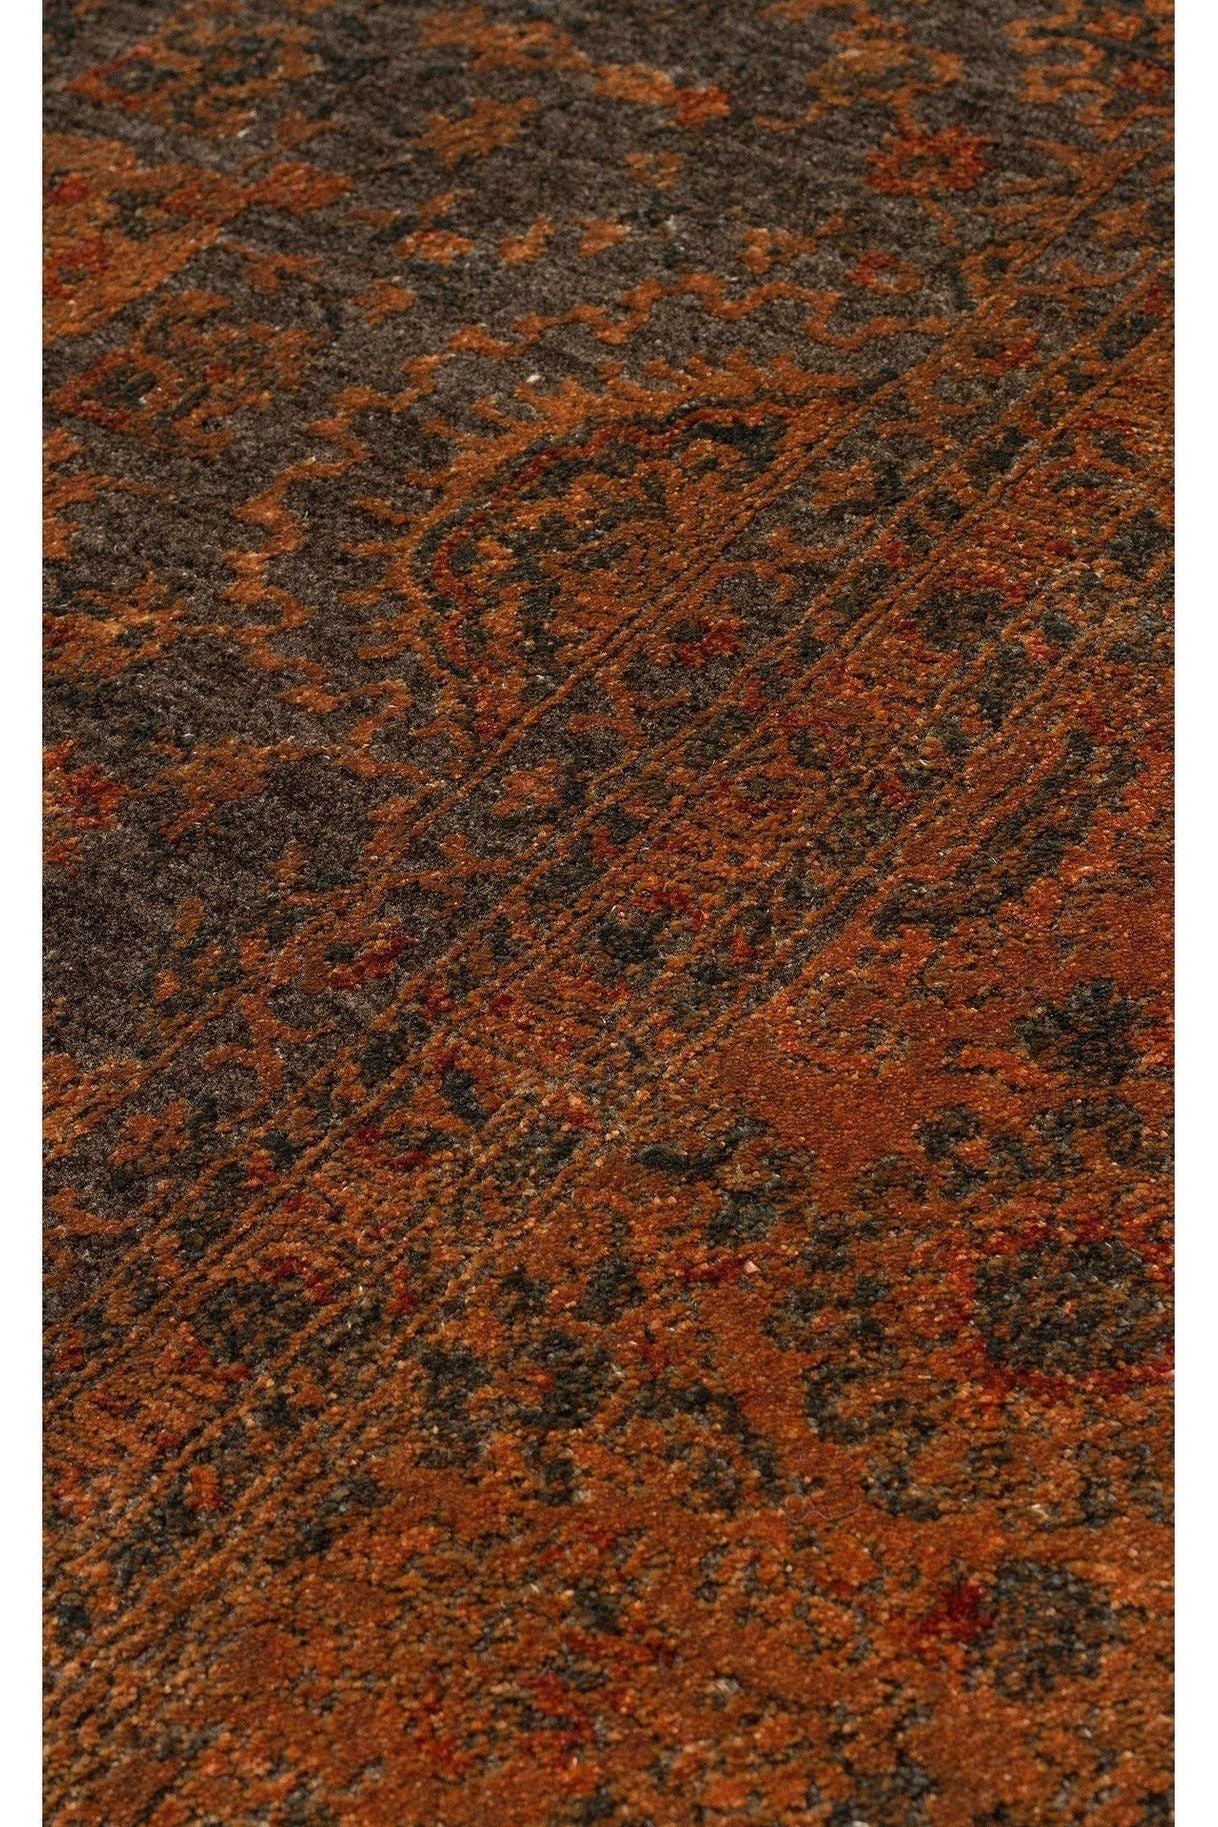 #Turkish_Carpets_Rugs# #Modern_Carpets# #Abrash_Carpets#Lhr 01 Terra